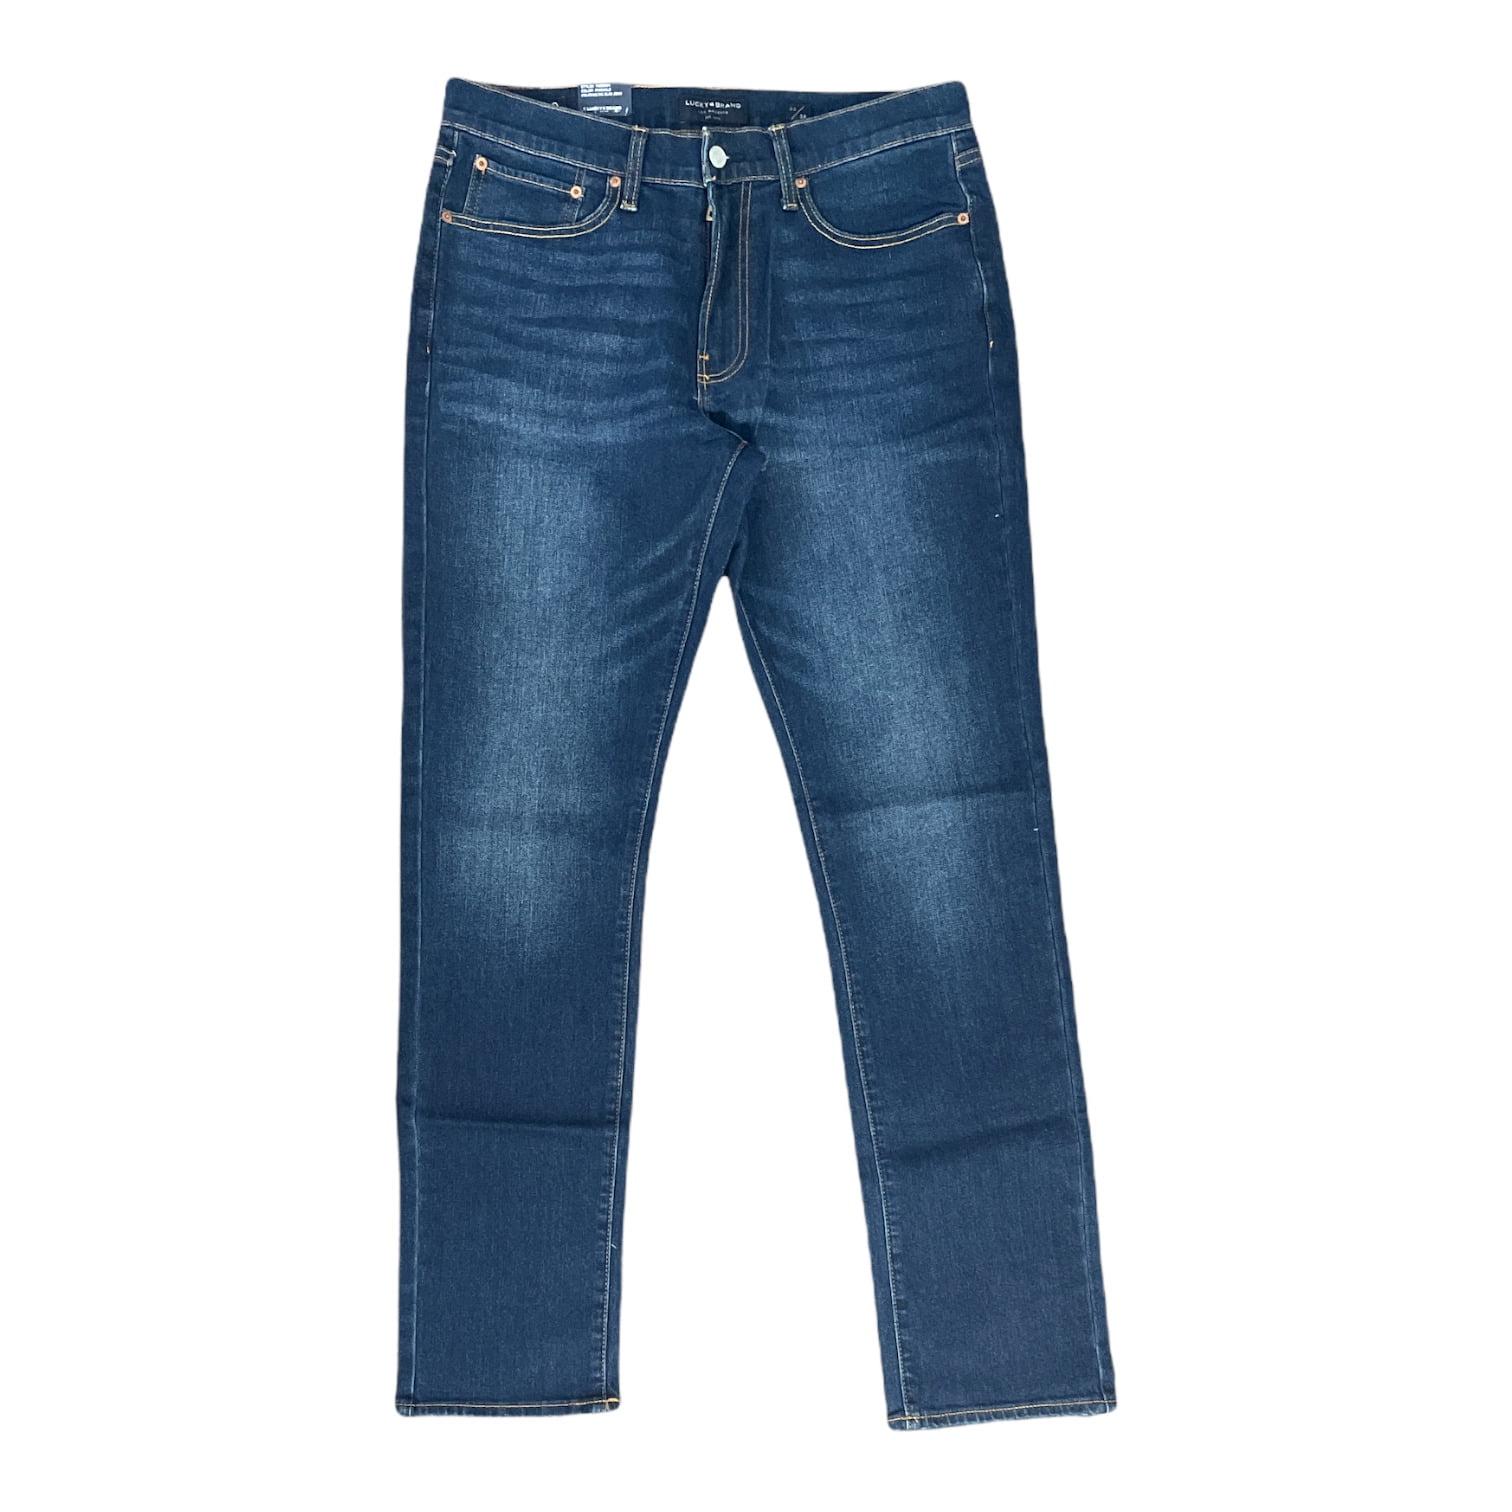 Lucky Brand Men's 410 Athletic Slim Fit 2 Way Stretch 5 Pocket Jean  (Parivale, 36x30)